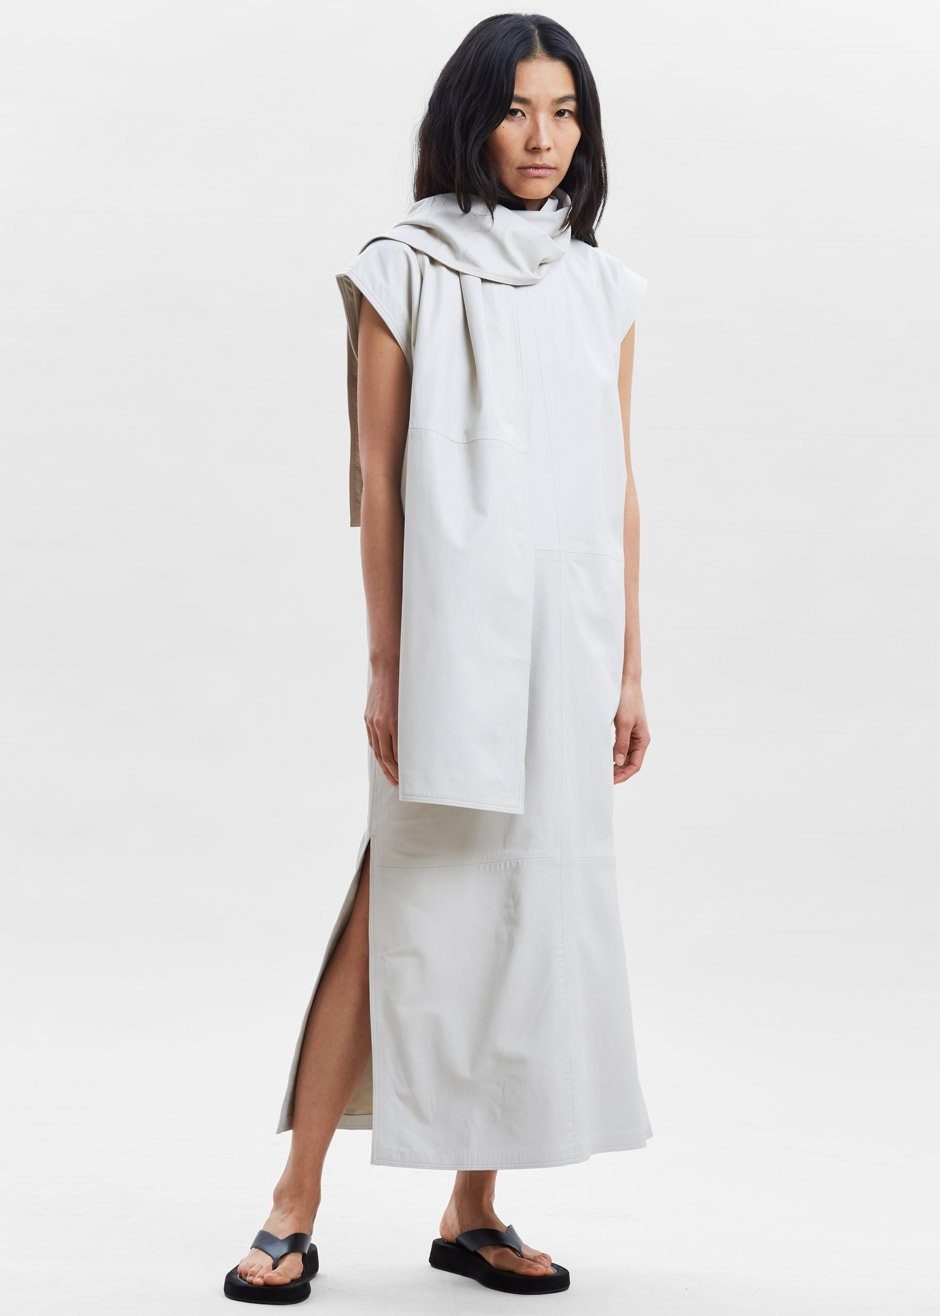 Loulou Studio Lebuan Leather Dress - Ivory - 4